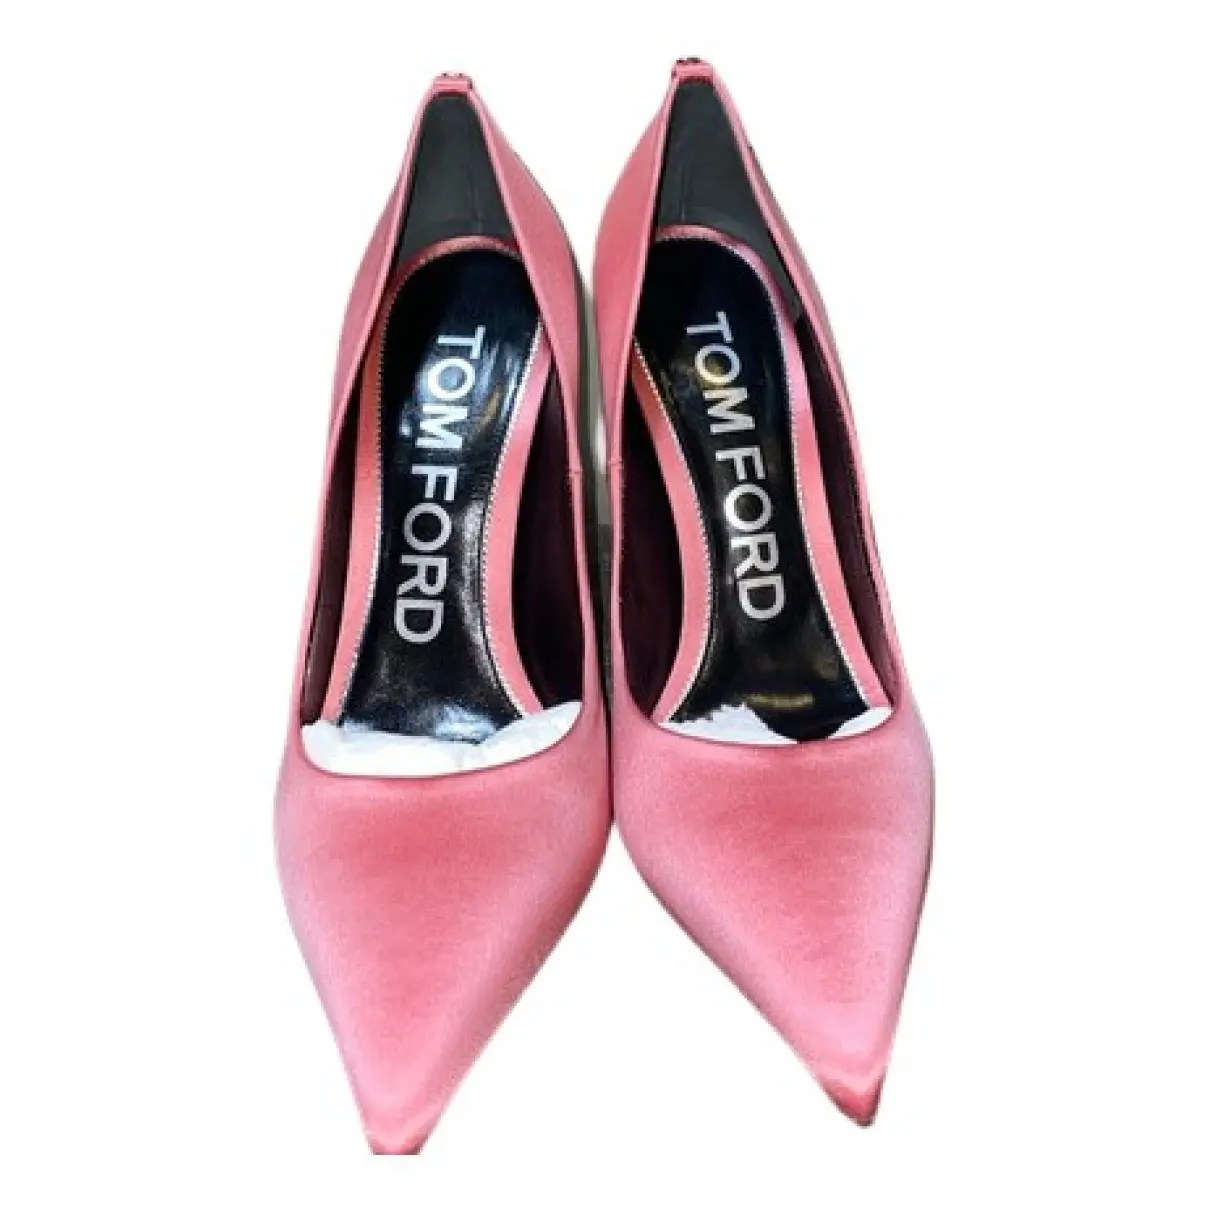 Buy Tom Ford Cloth heels online